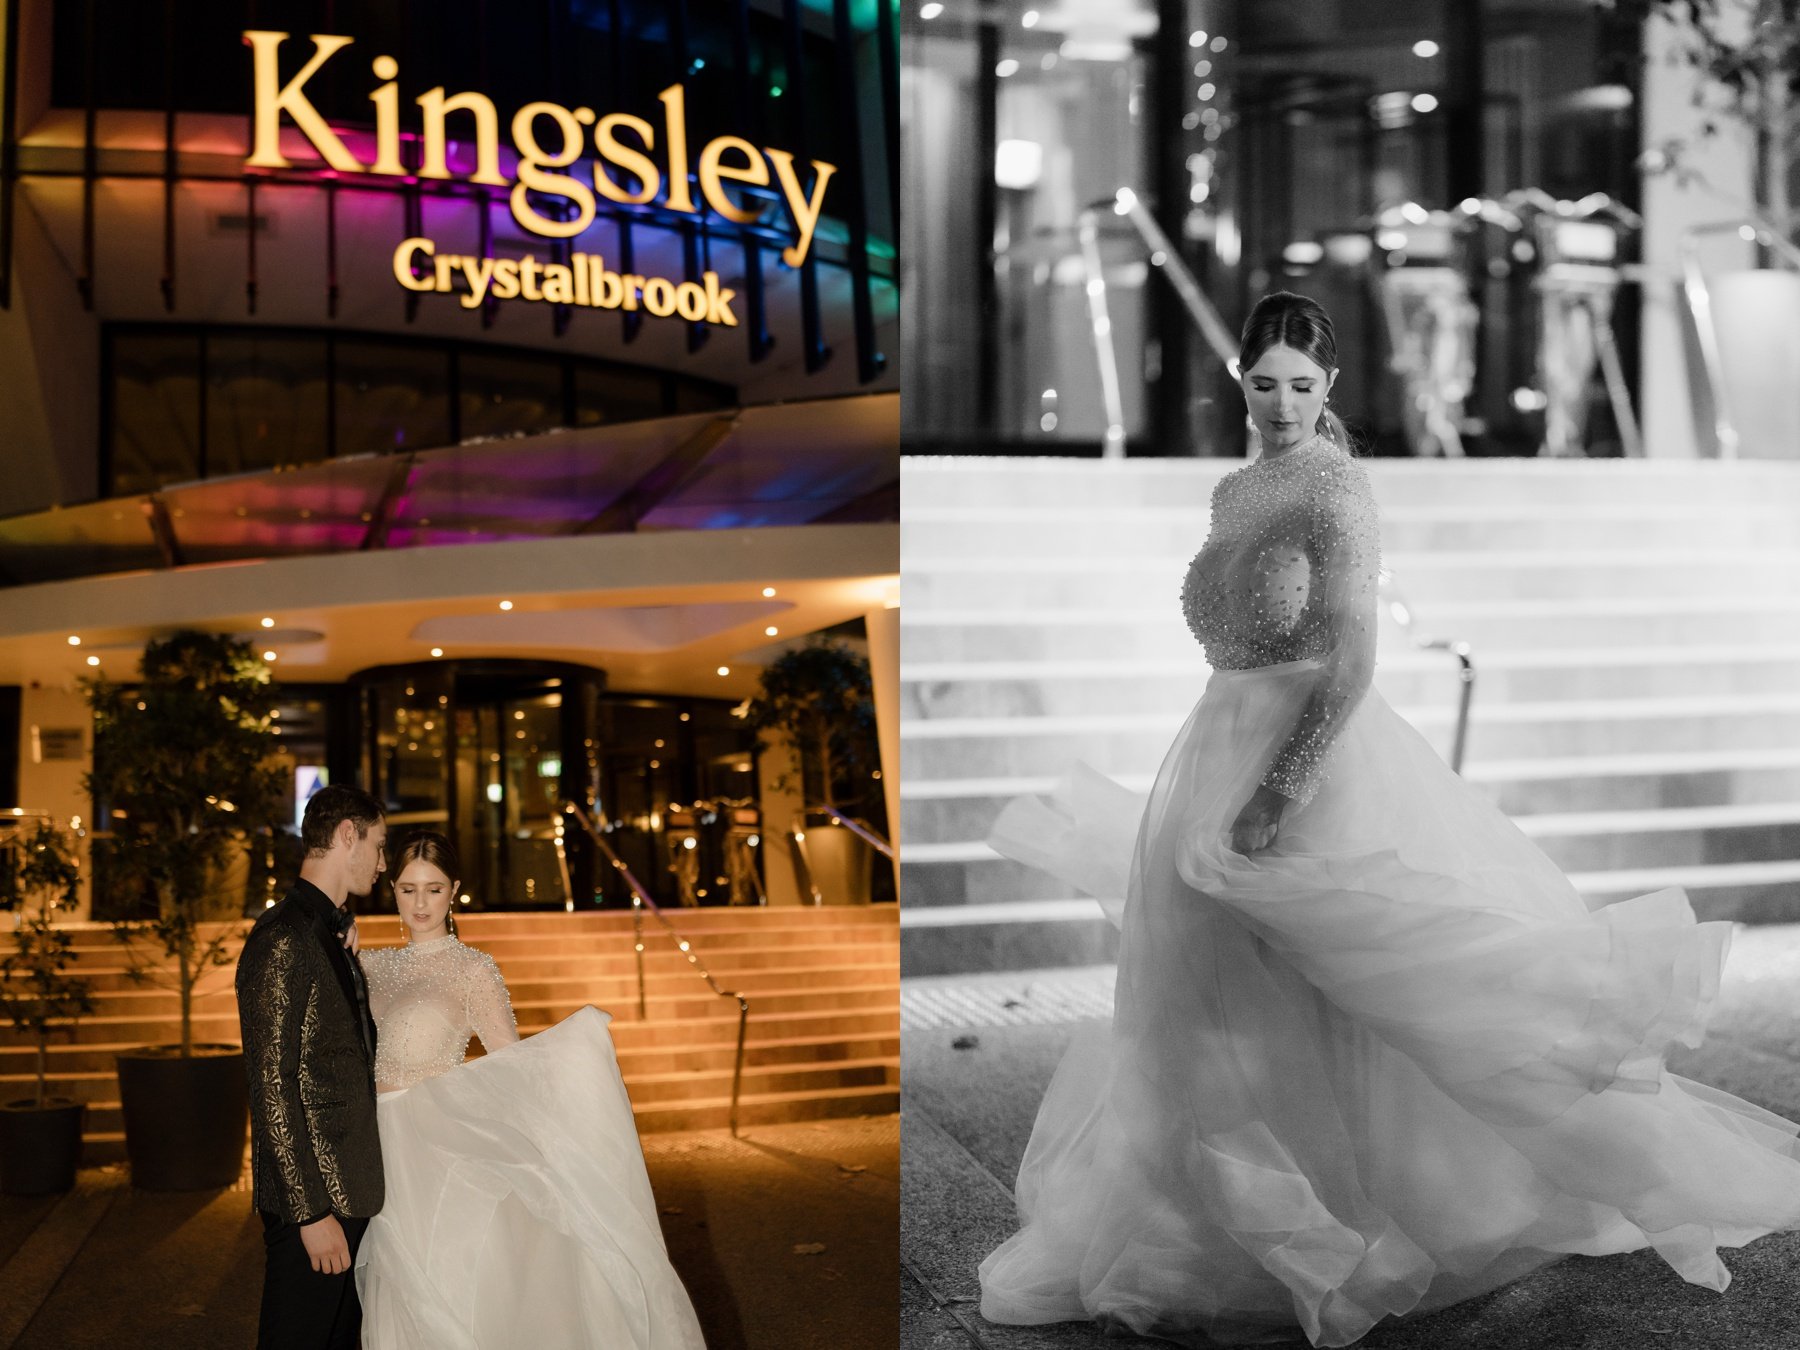 54 Crystalbrook Kingsley Customs House Hotel Wedding Newcastle.jpg